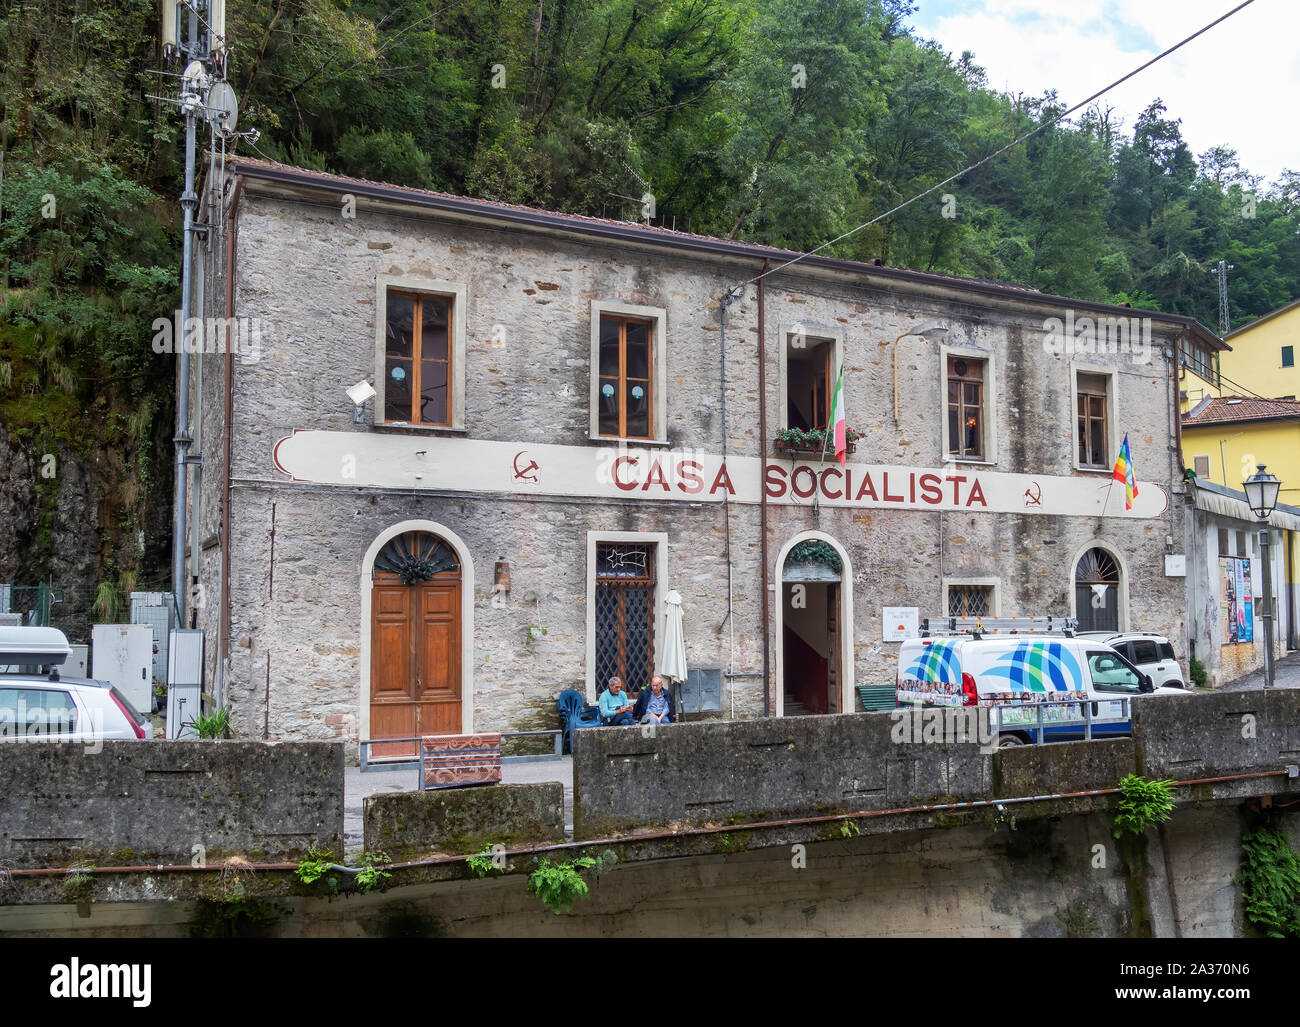 FORNO, MASSA CARRARA, ITALY - SEPTEMBER 29, 2019: View of the historically important building, the Casa Socialista ie Socialist House. Stock Photo